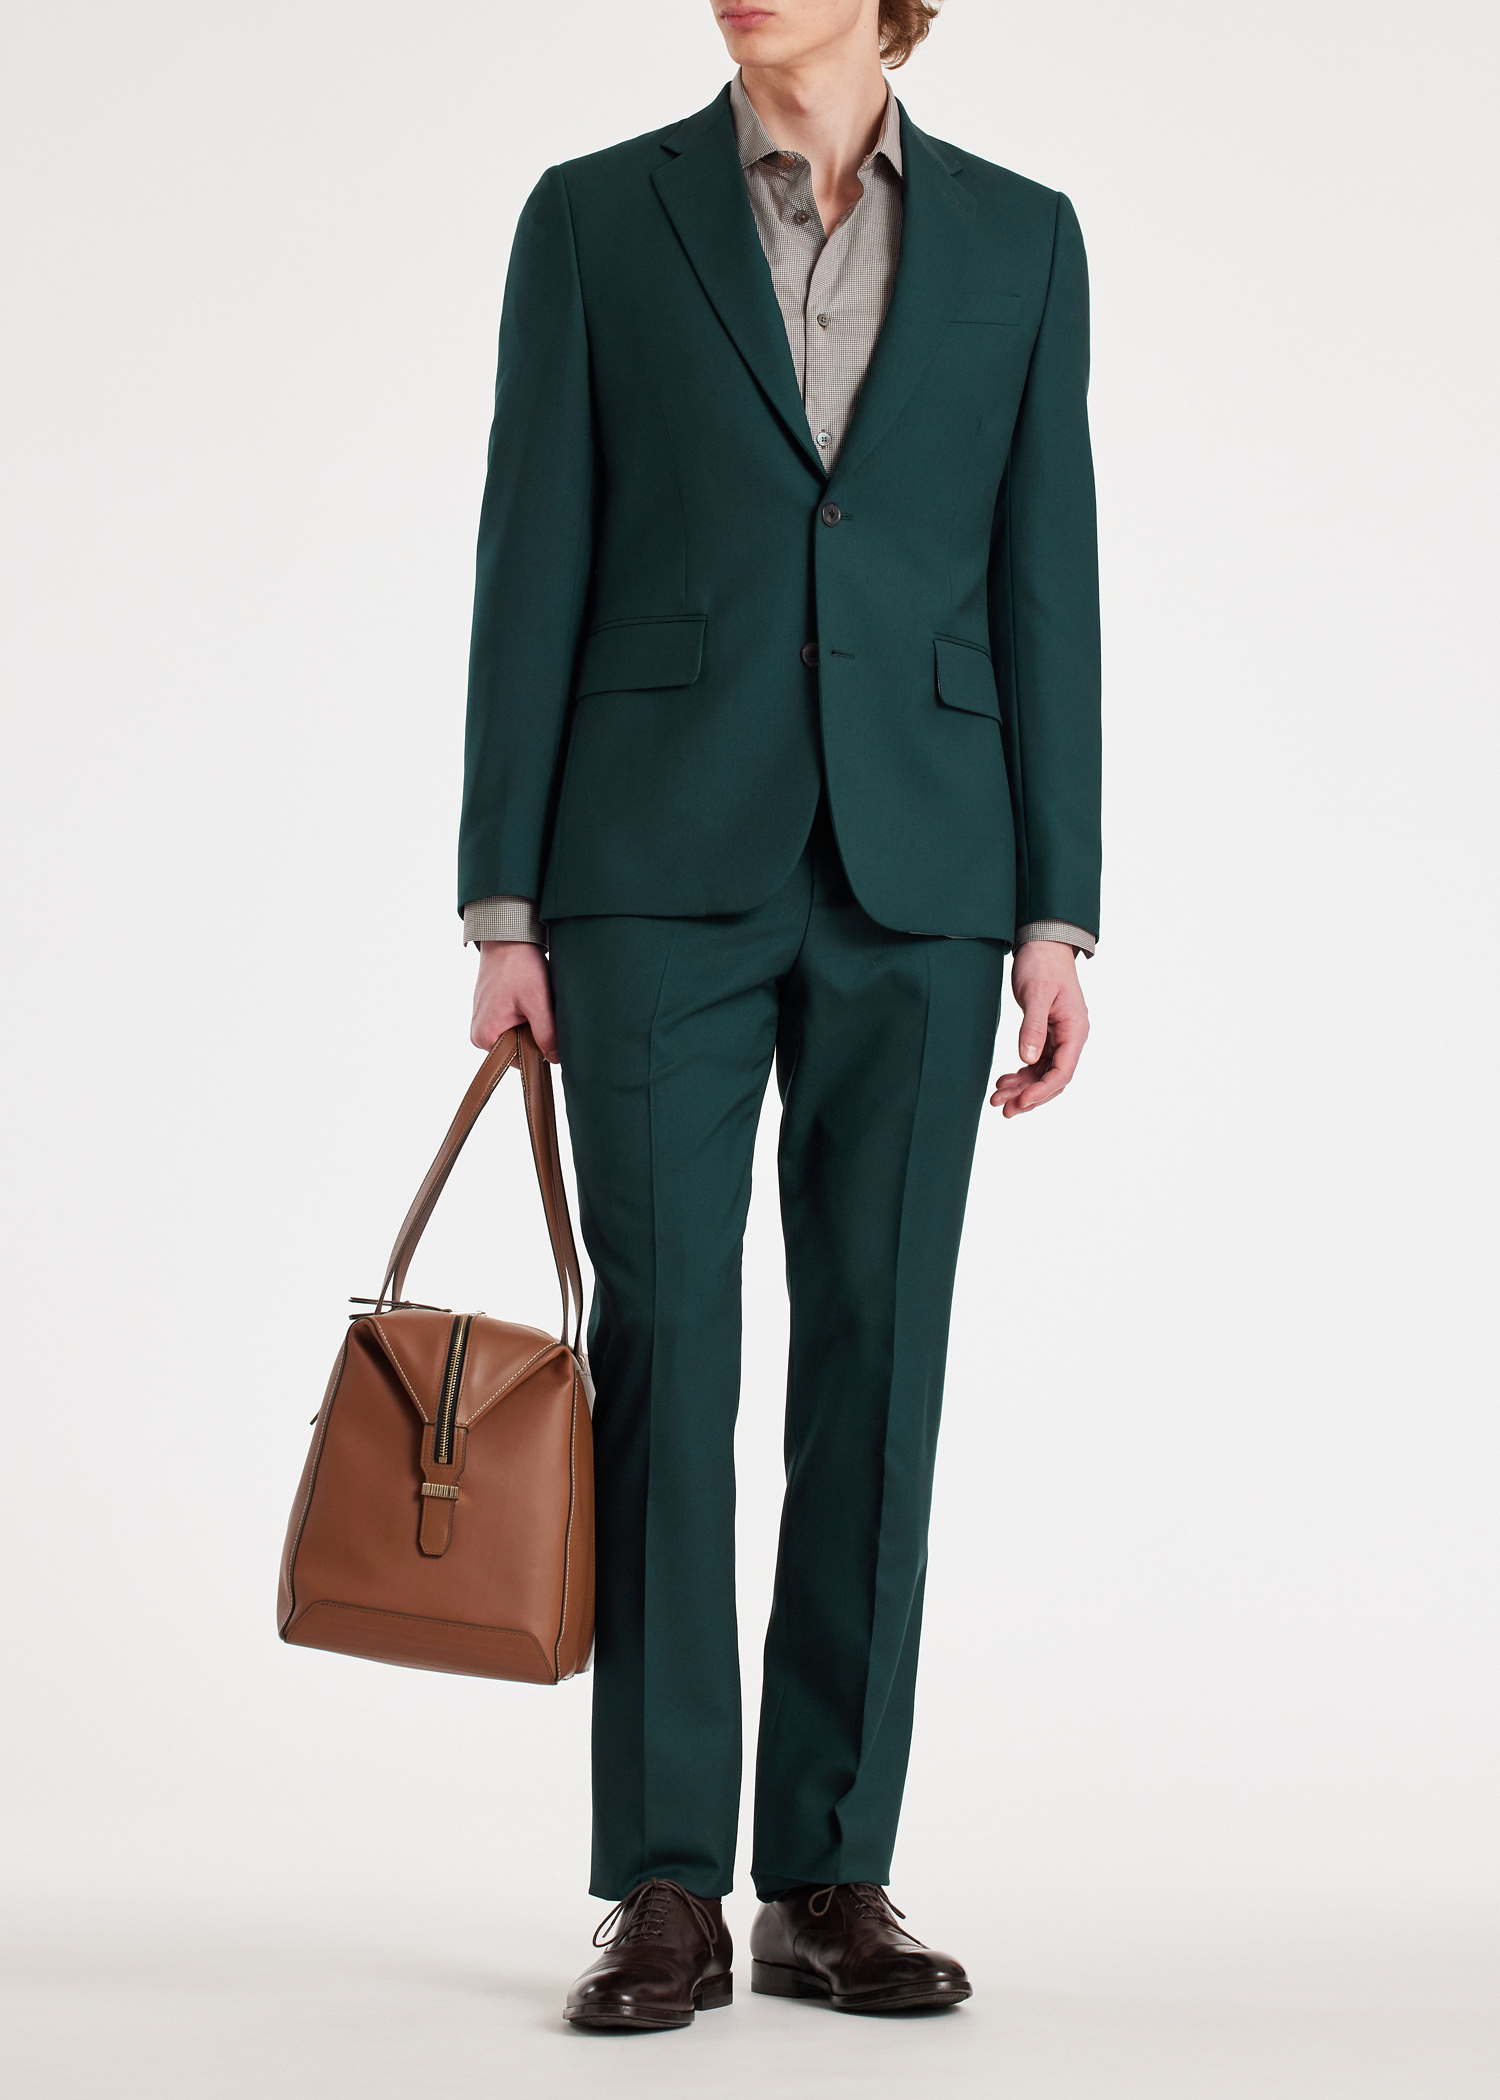 Designer Suits for Men | Paul Smith